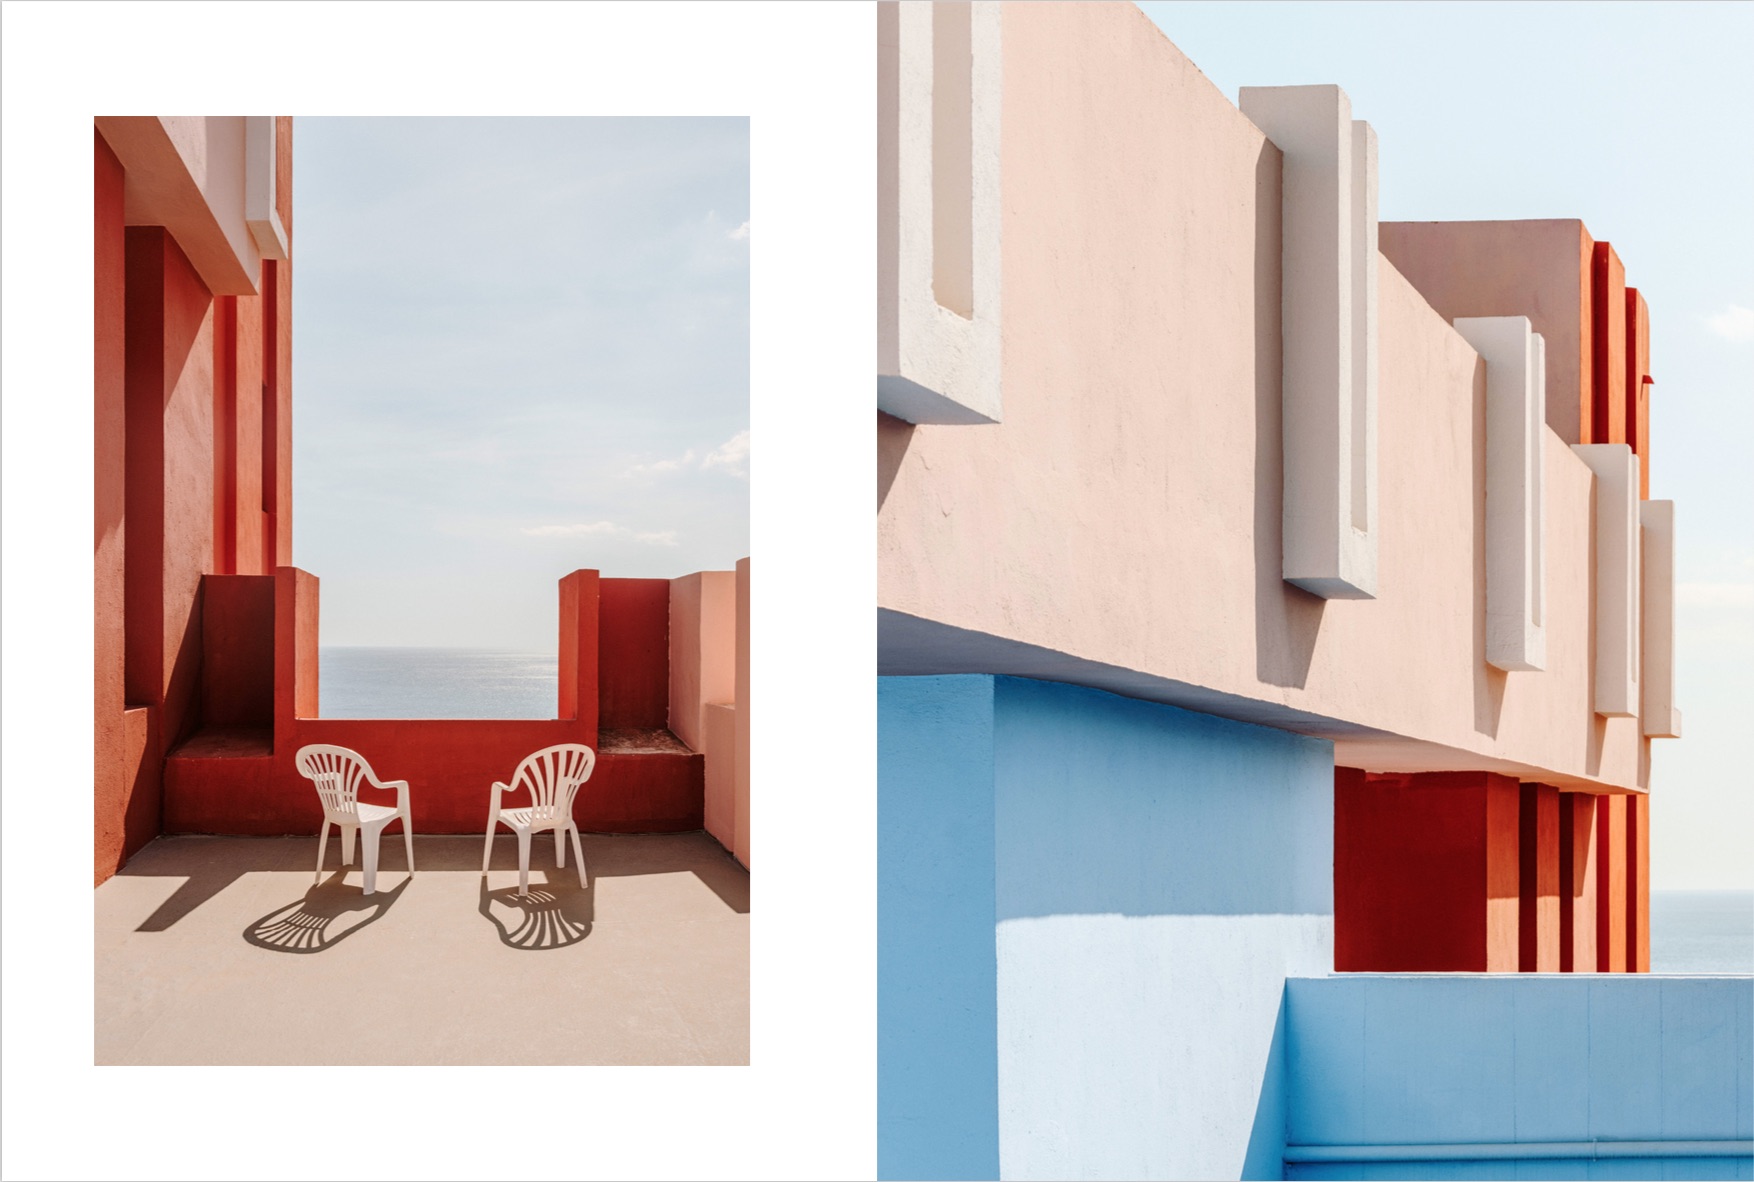 By Gestalten, Ricardo Bofill, Pablo Bofill from Ricardo Bofill: Visions of Architecture copyright Gestalten 2019